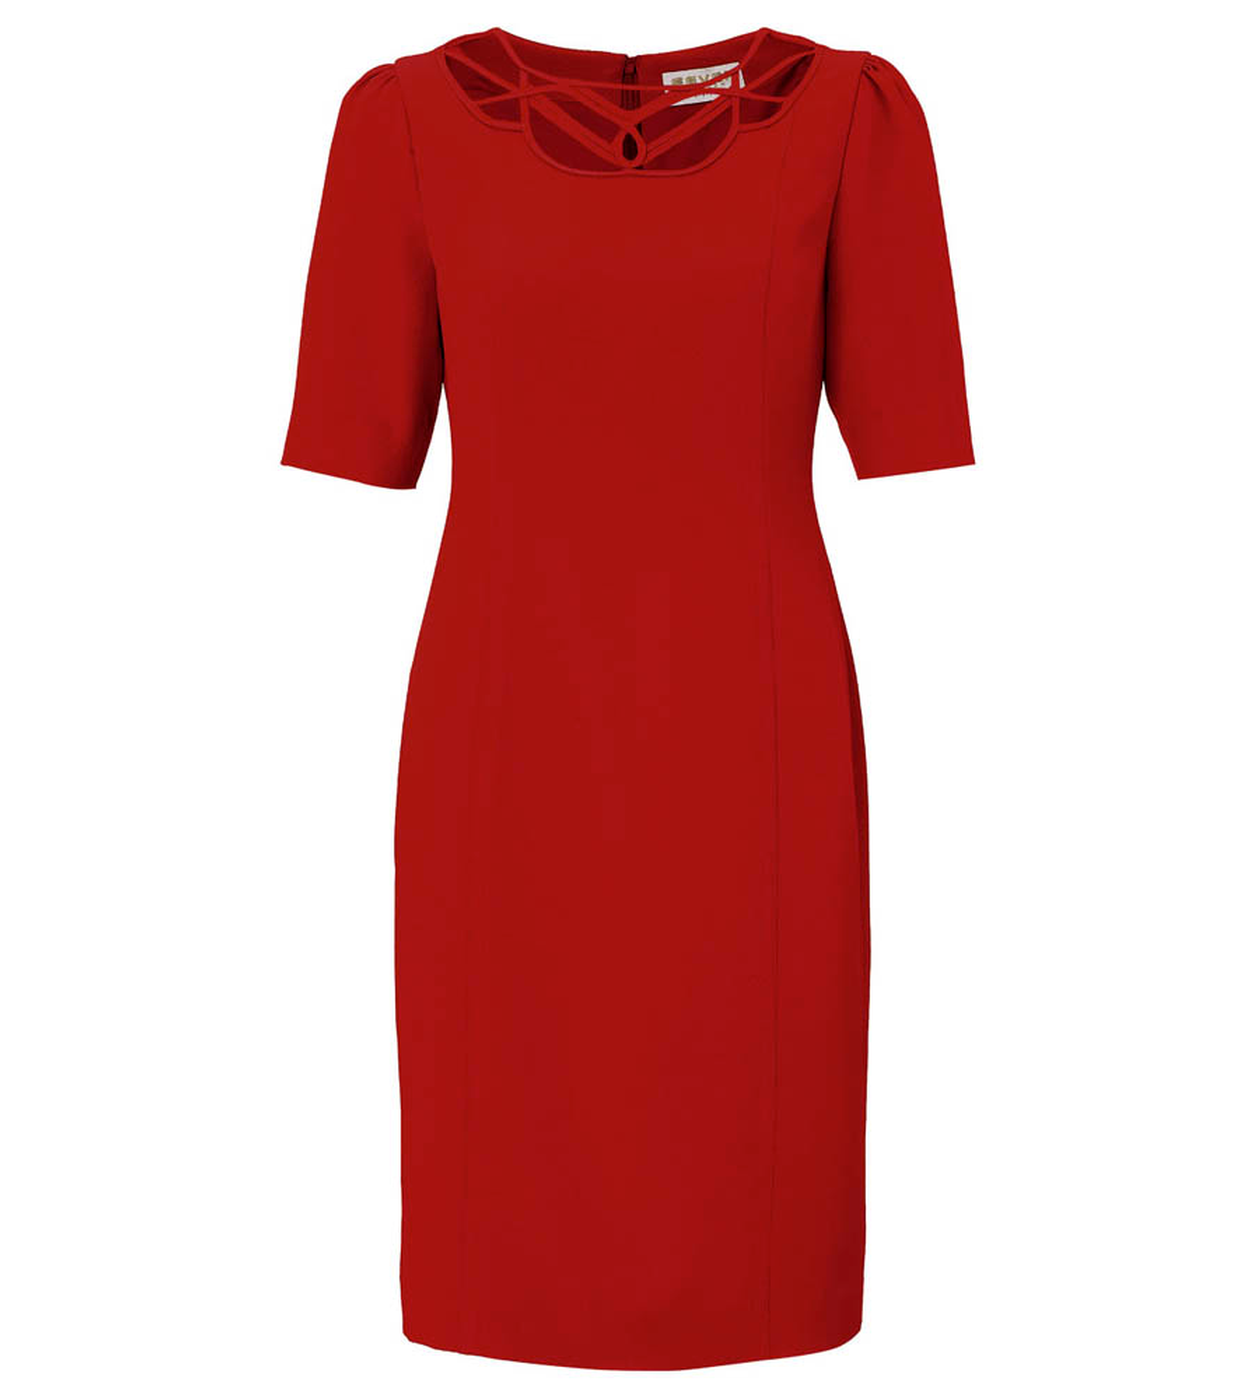 Frances FEVER Retro Vintage 40s style Dress (Red)